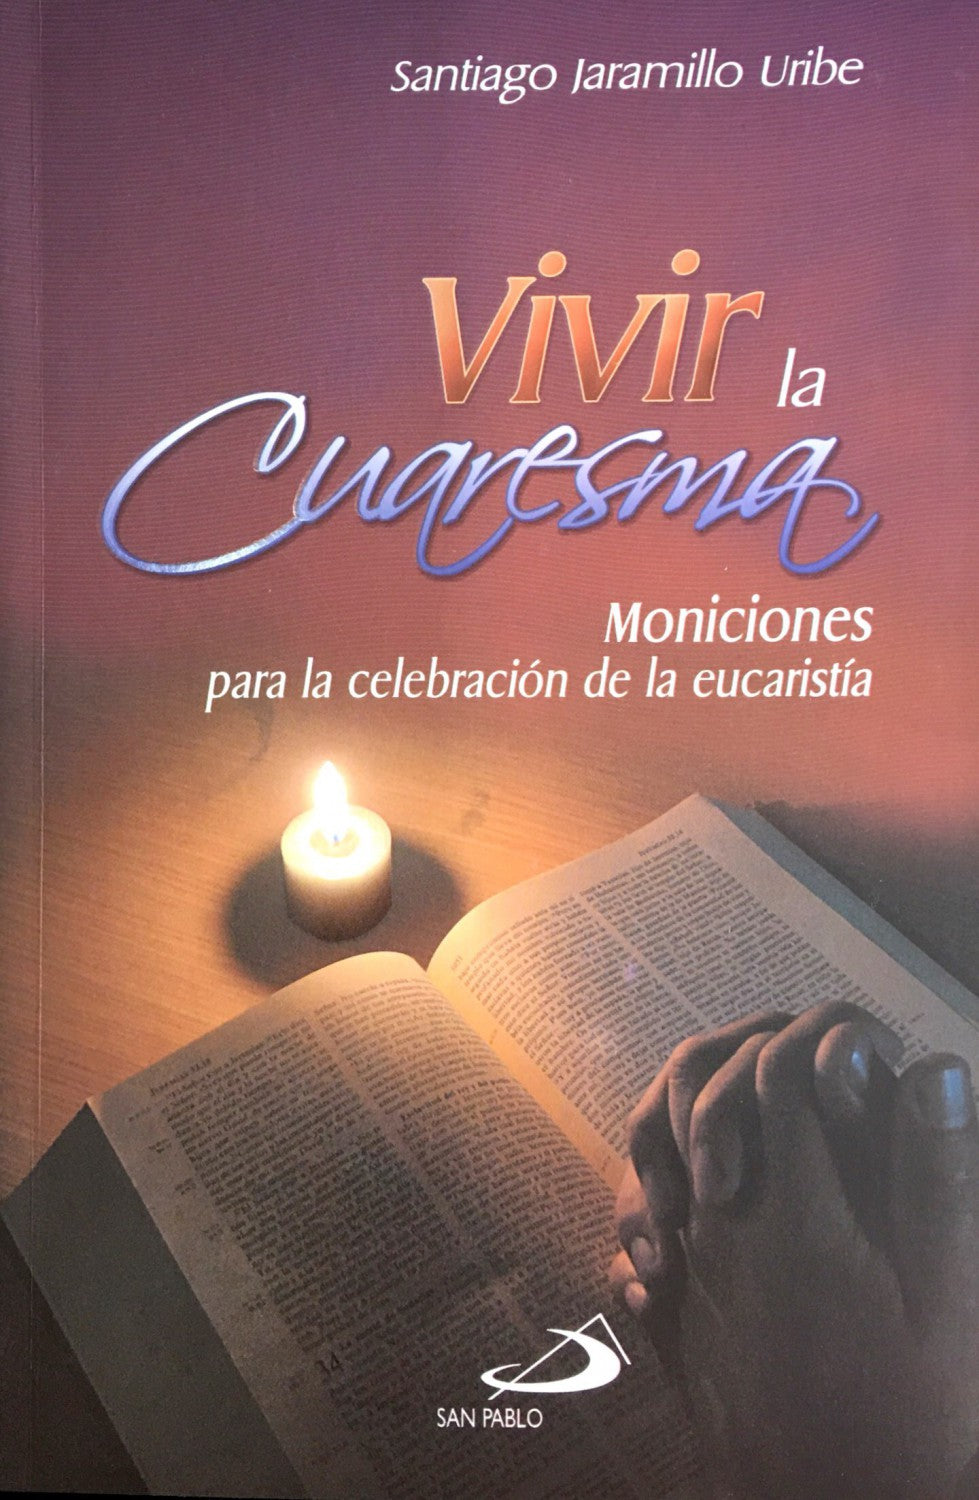 Libro: Vivir la Cuaresma - Santiago Jaramillo Uribe